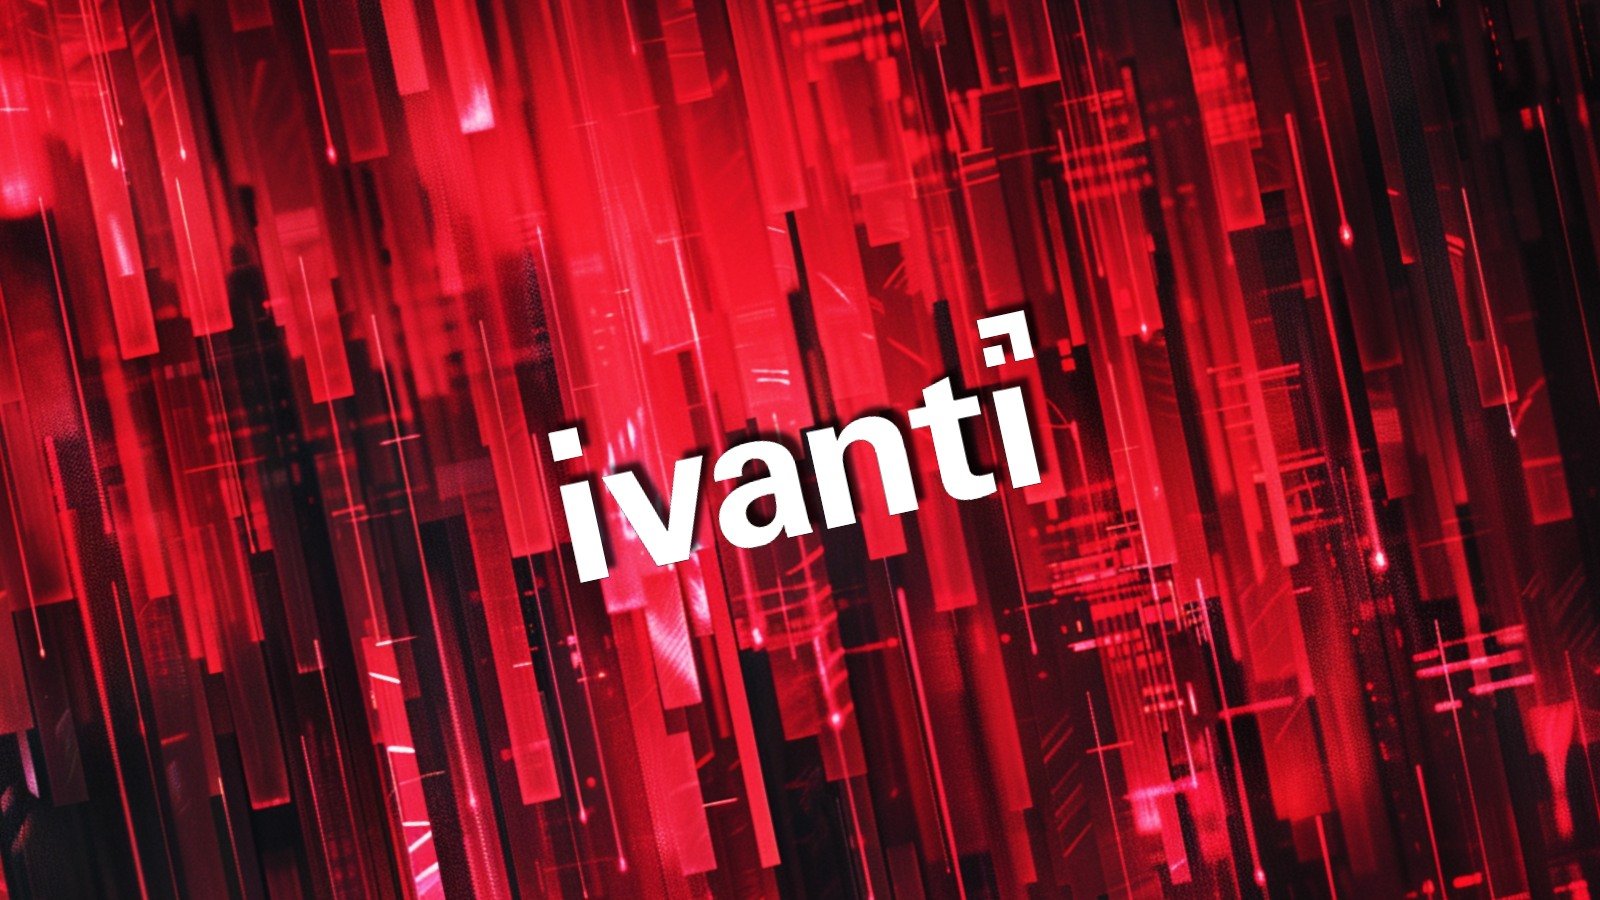 Ivanti fixes VPN gateway vulnerability allowing RCE, DoS attacks